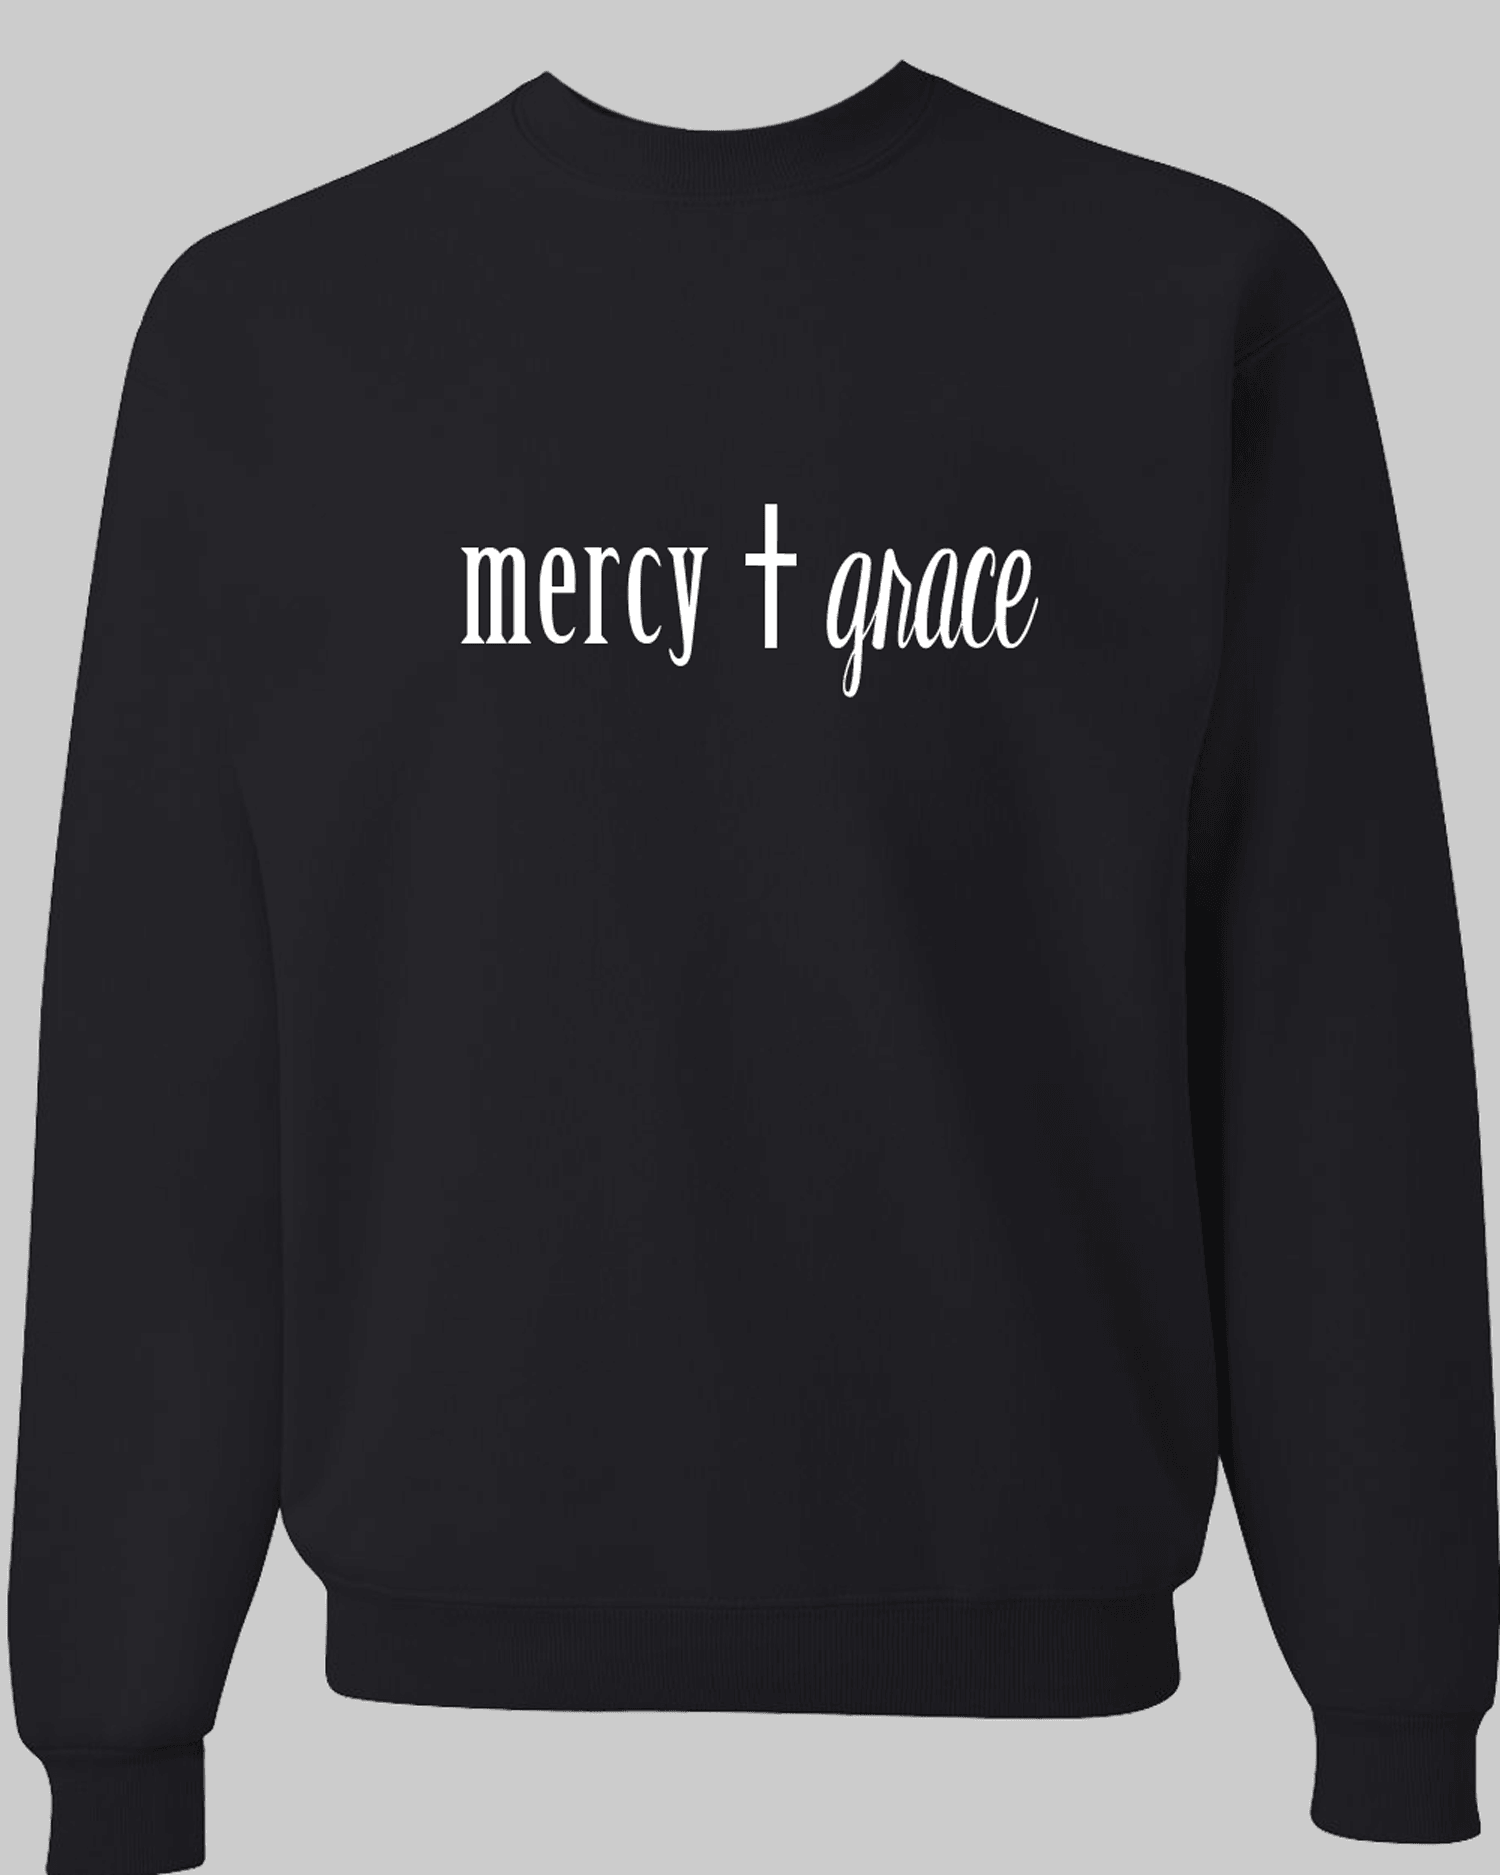 Simply Said Love People the Way God Loves You Unisex Black Fleece Sweatshirt - Mercy Plus Grace